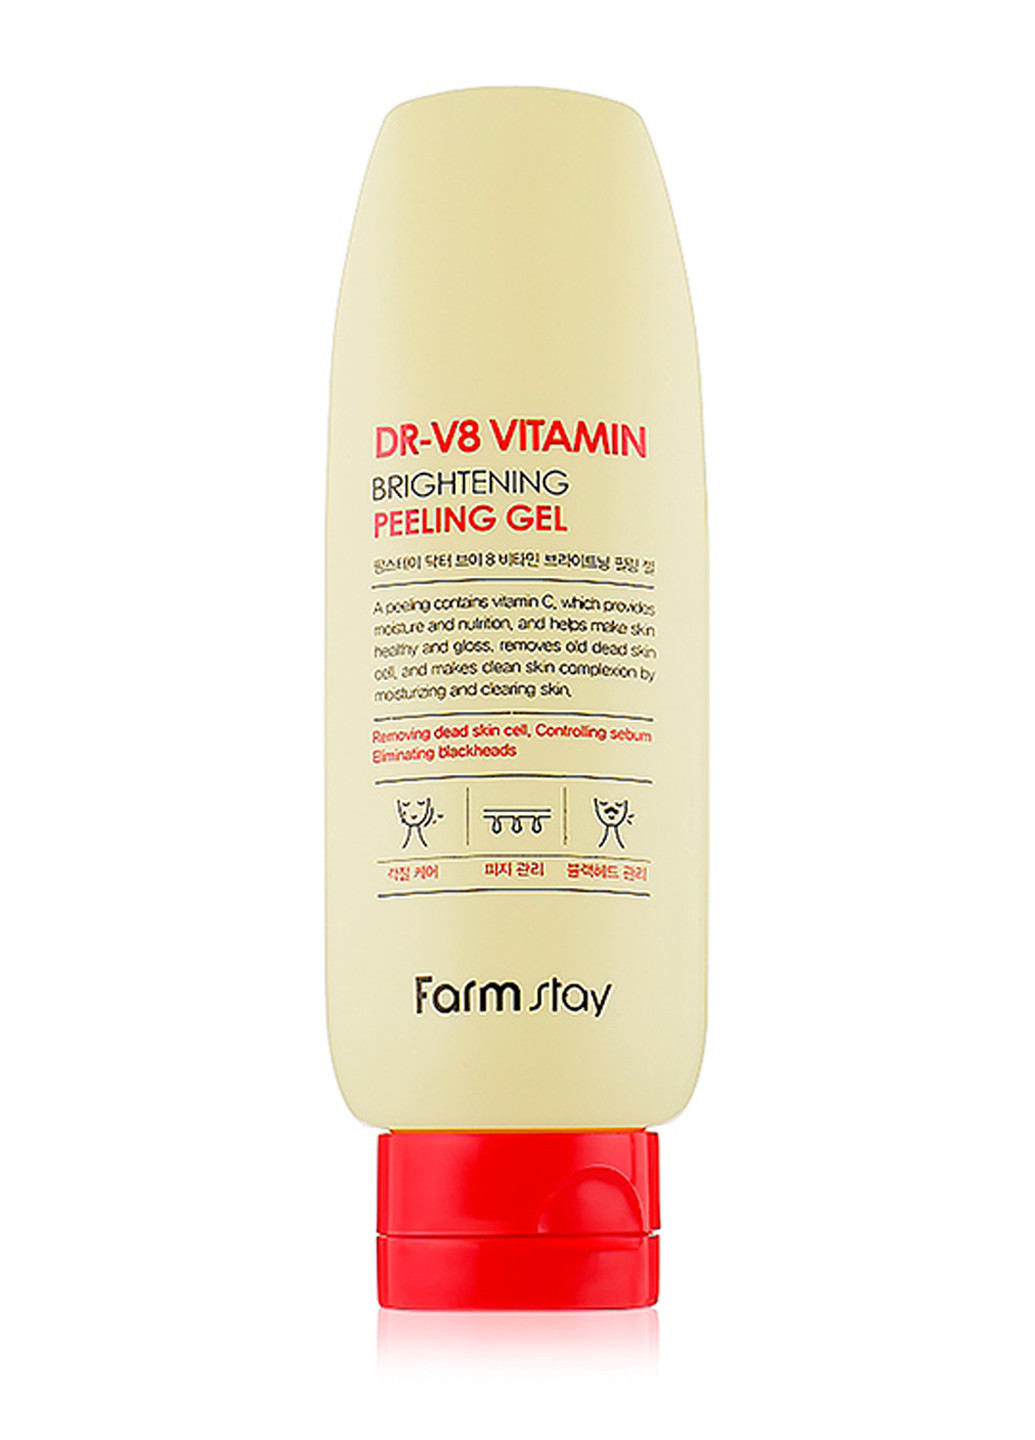 Пилинг гель DR-V8 Vitamin Brightening Peeling Gel с витаминным комплексом 150 мл FarmStay 8809469775922 (260517112)